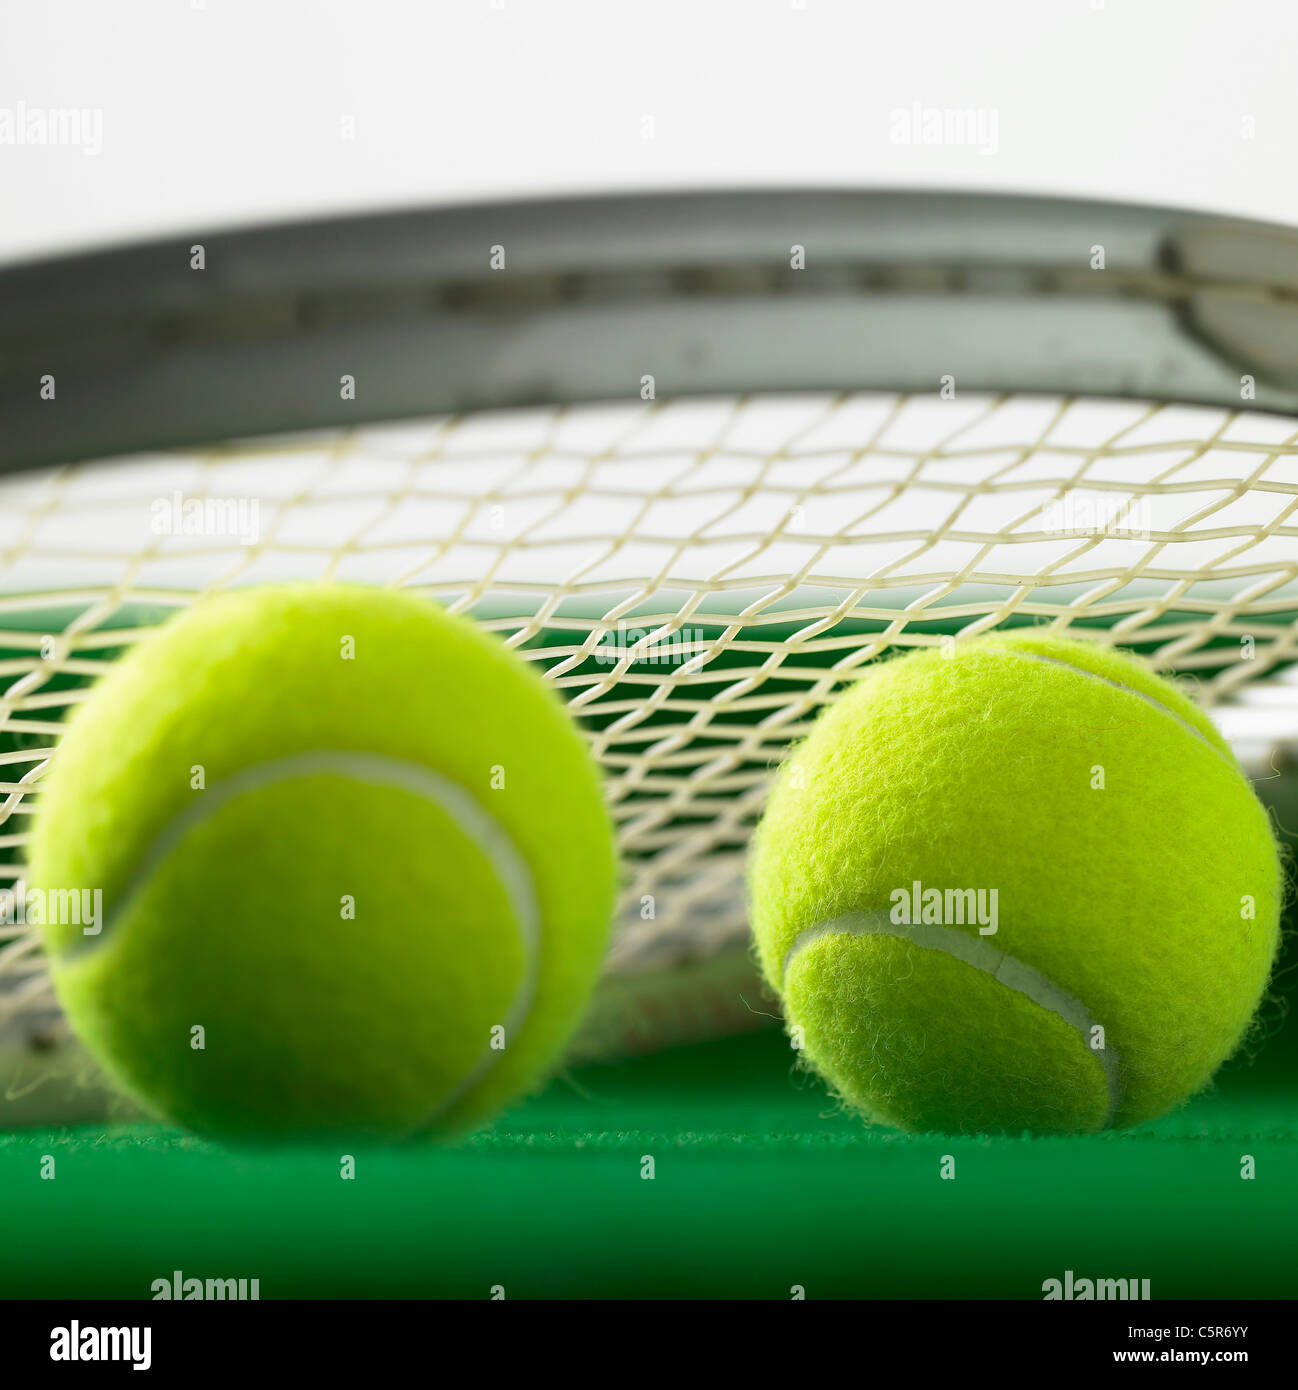 Tennis racket and tennis ball Stock Photo